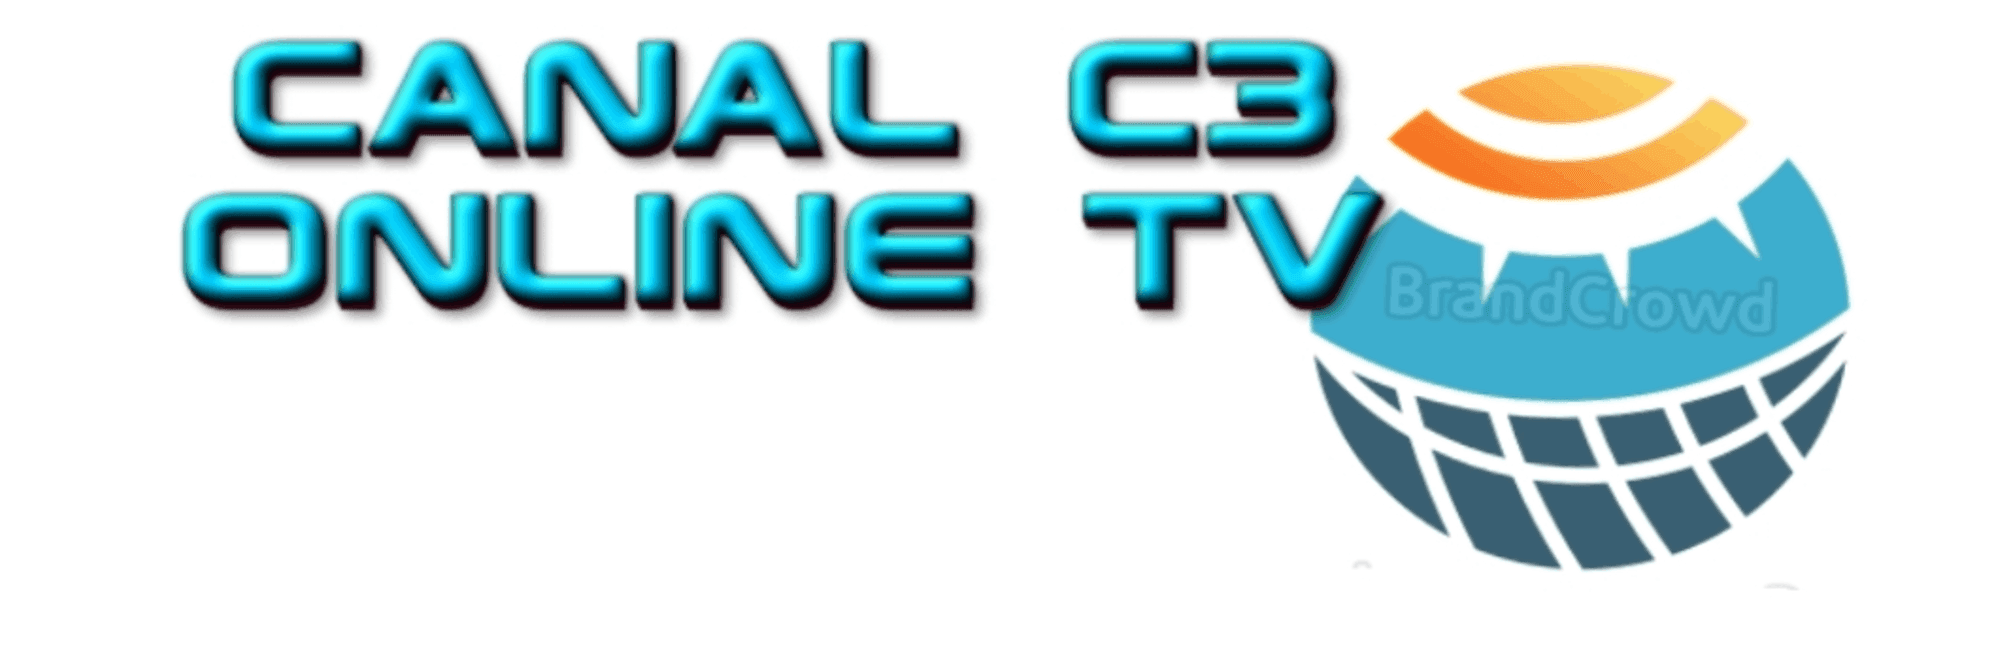 Canal C3 online gt banner